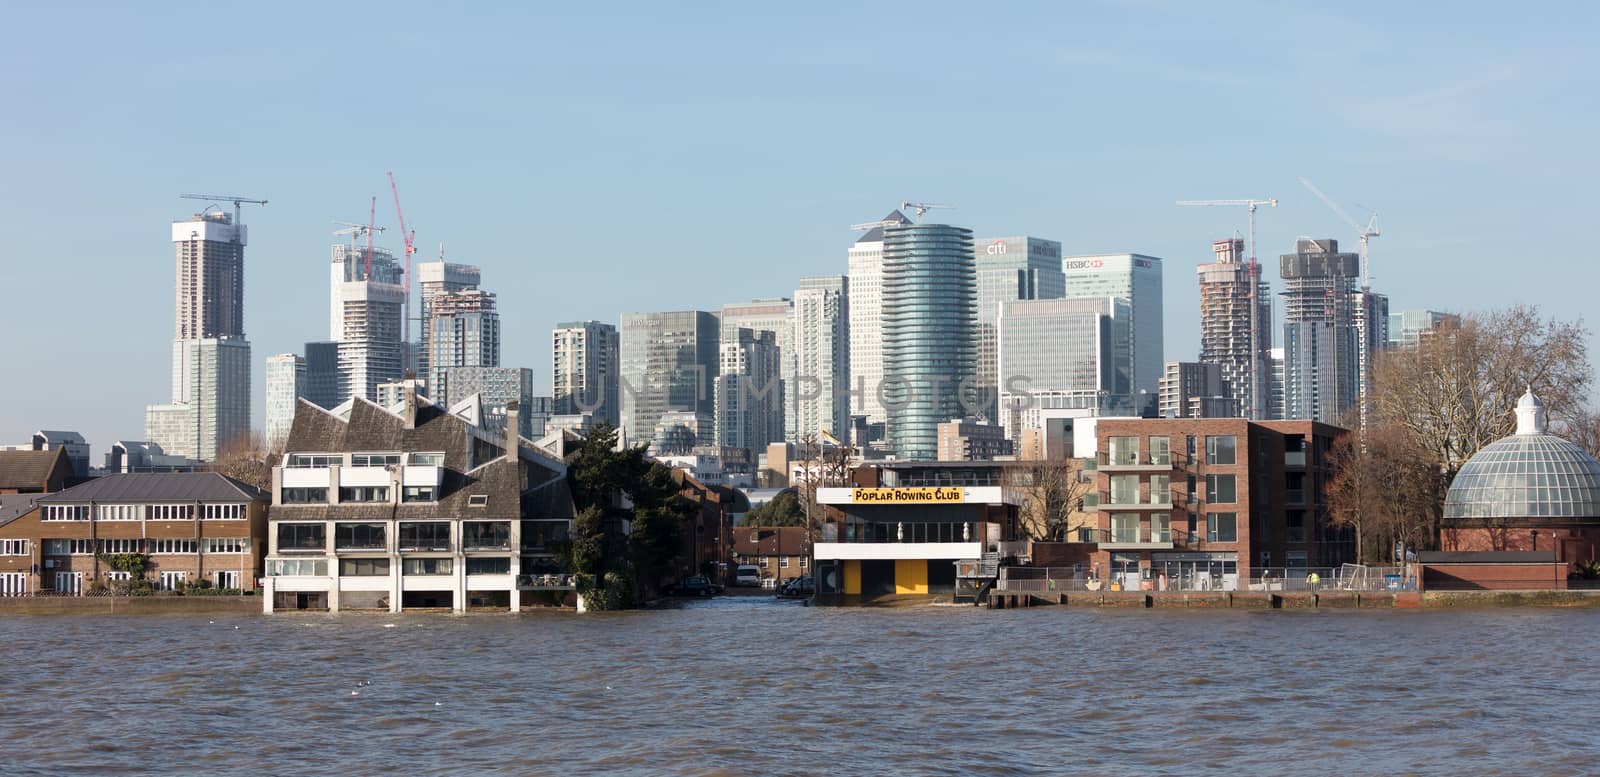 London, United Kingdom - Februari 21, 2019: London skyline build by michaklootwijk